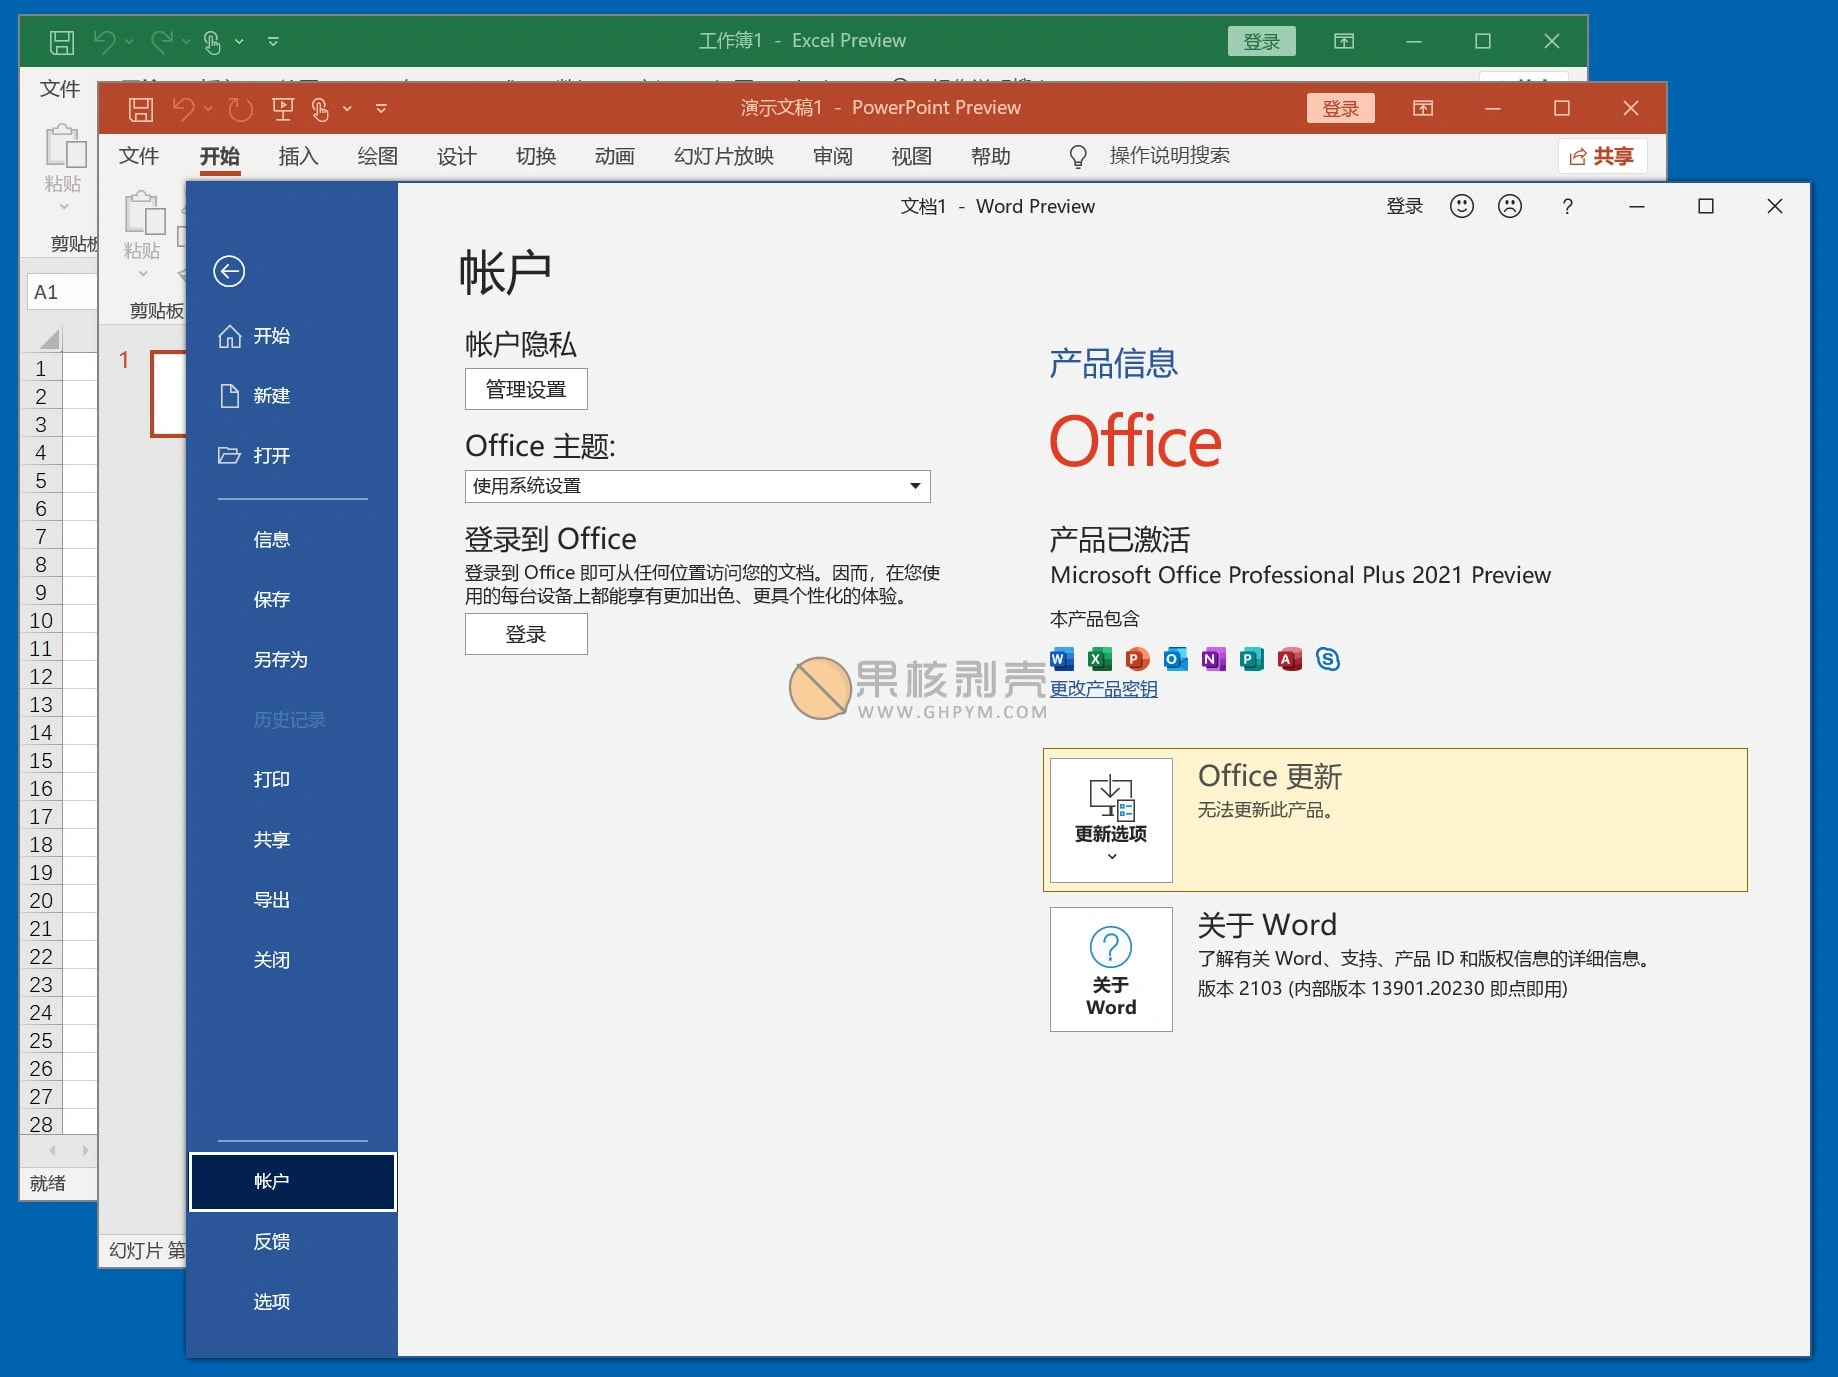 Office 2021 RTM 中文正式版 离线镜像 - 果核剥壳